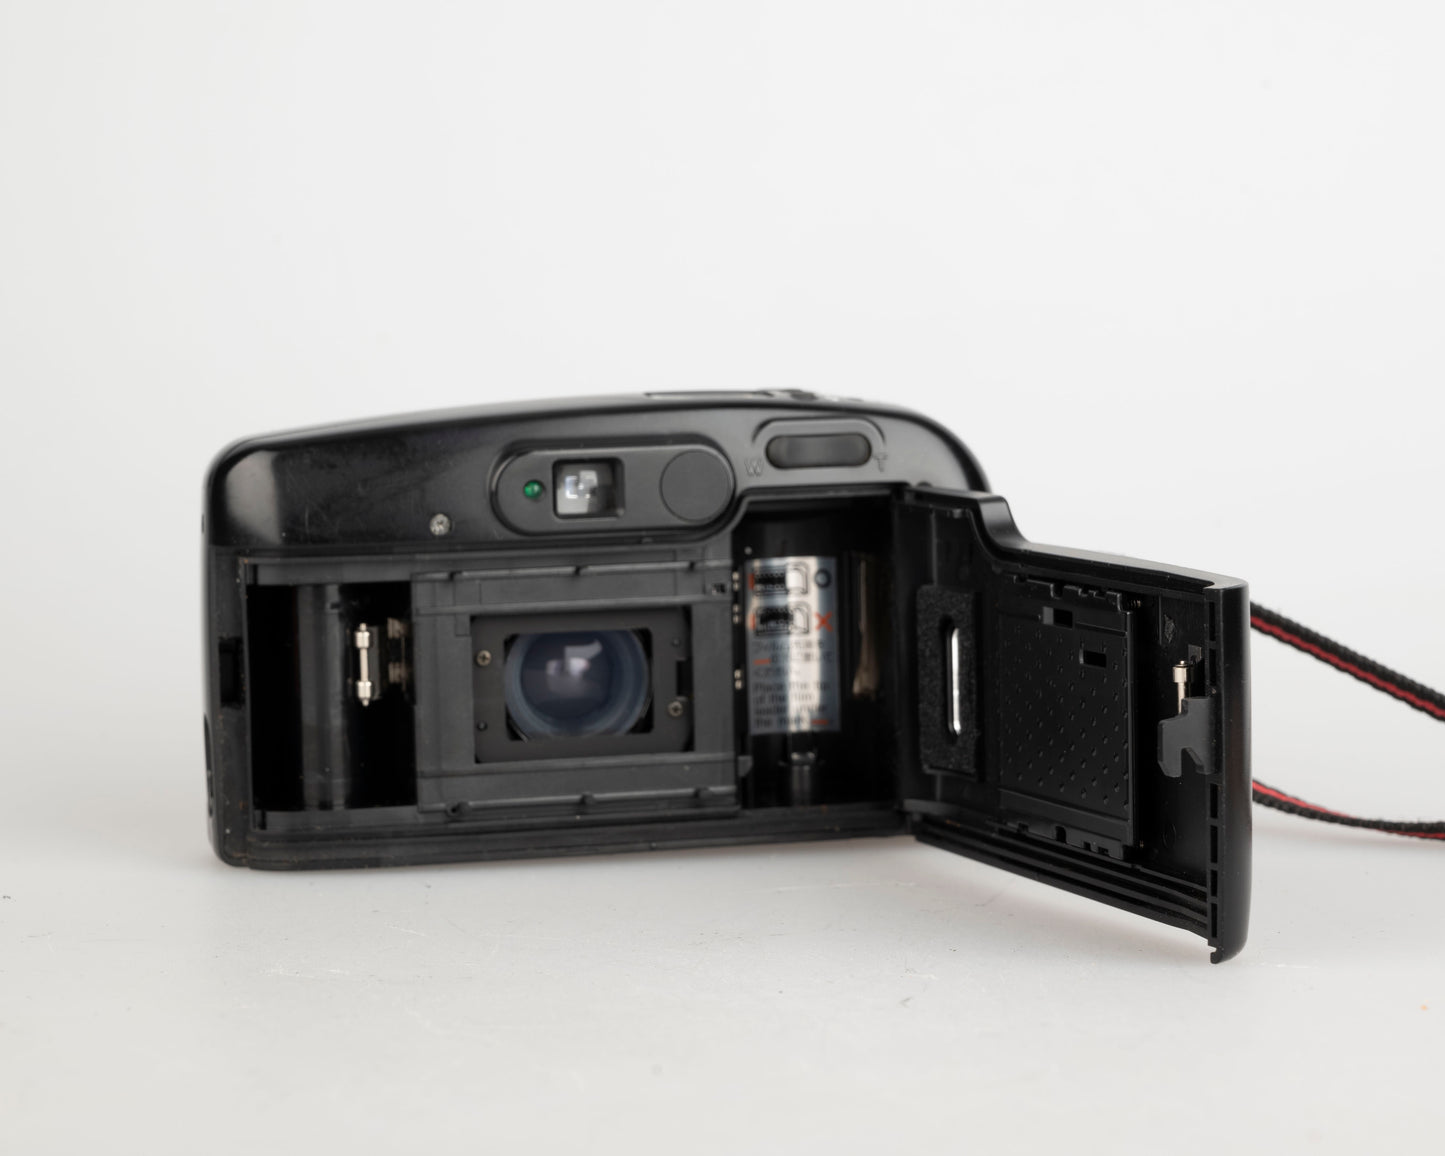 Yashica Elite Zoom 70 35mm film camera (serial 041716)